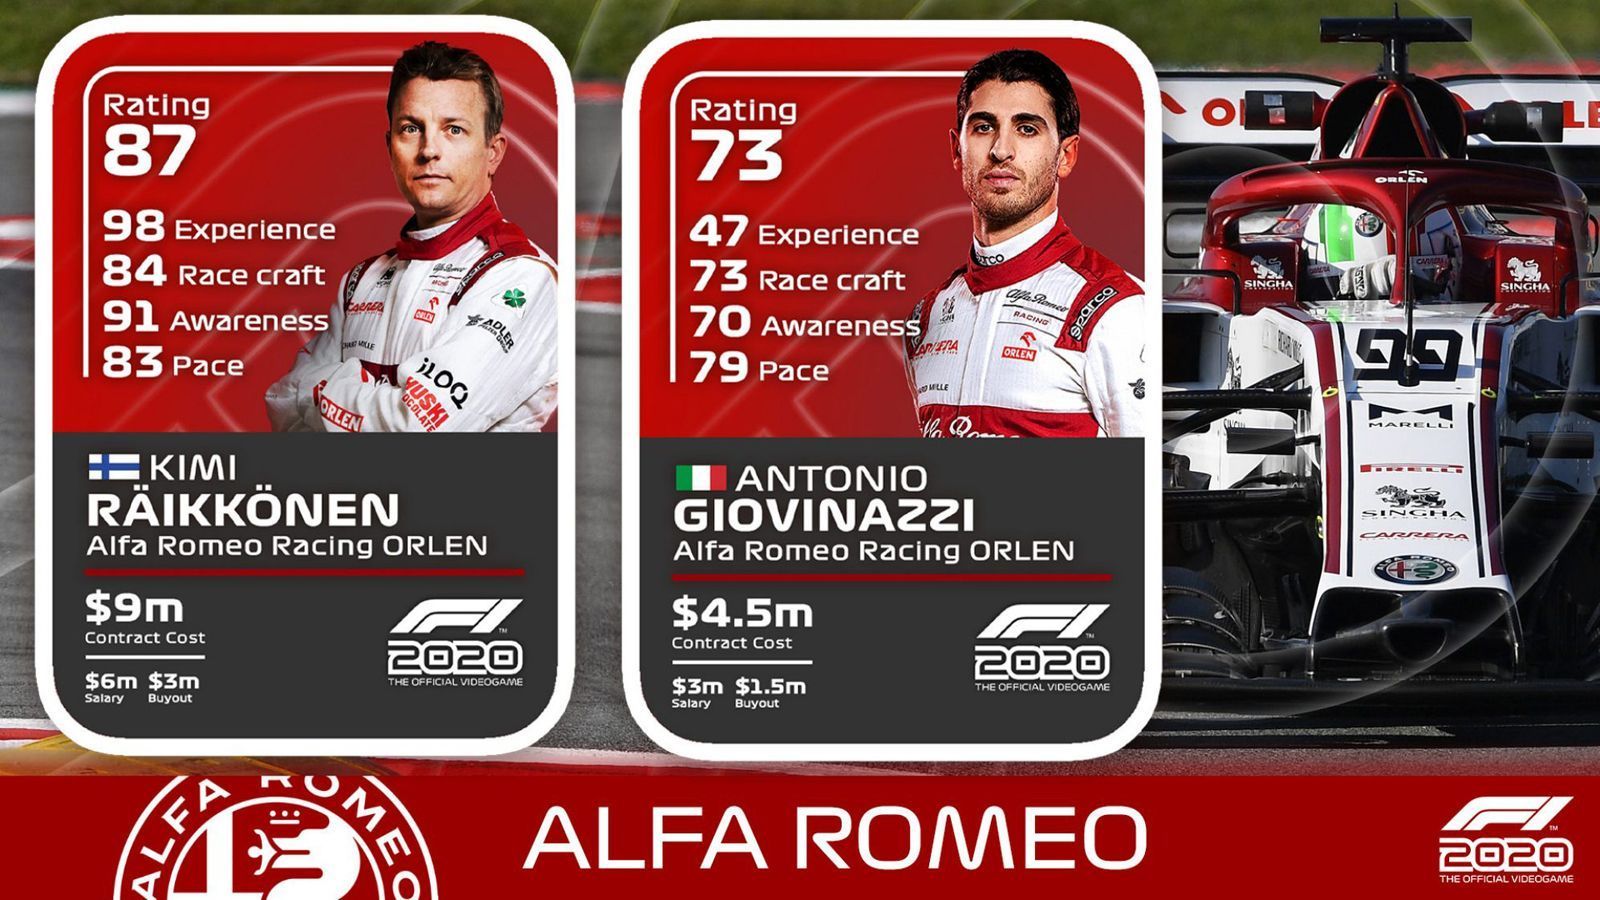 
                <strong>Alfa Romeo</strong><br>
                Kimi Räikkönen: Erfahrung 98, Fahrkunst 84, Bewusstsein 91, Pace 83, Overall Rating 87Antonio Giovinazzi: Erfahrung 47, Fahrkunst 73, Bewusstsein 70, Pace 79, Overall Rating 73
              